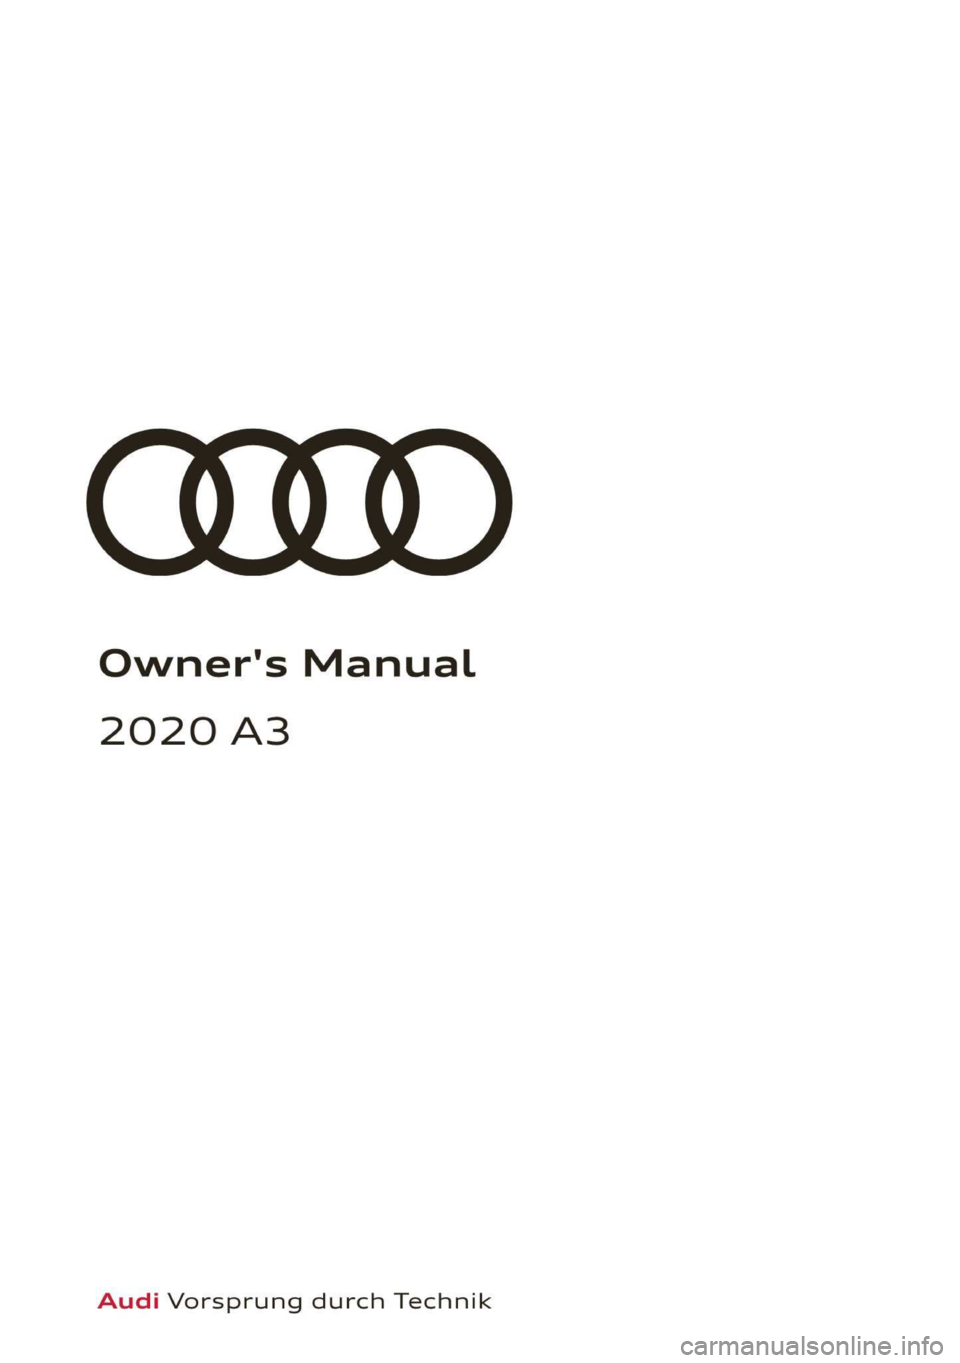 AUDI A3 2020  Owner´s Manual Owner's Manual 
2020 A3 
Audi Vorsprung durch Technik  